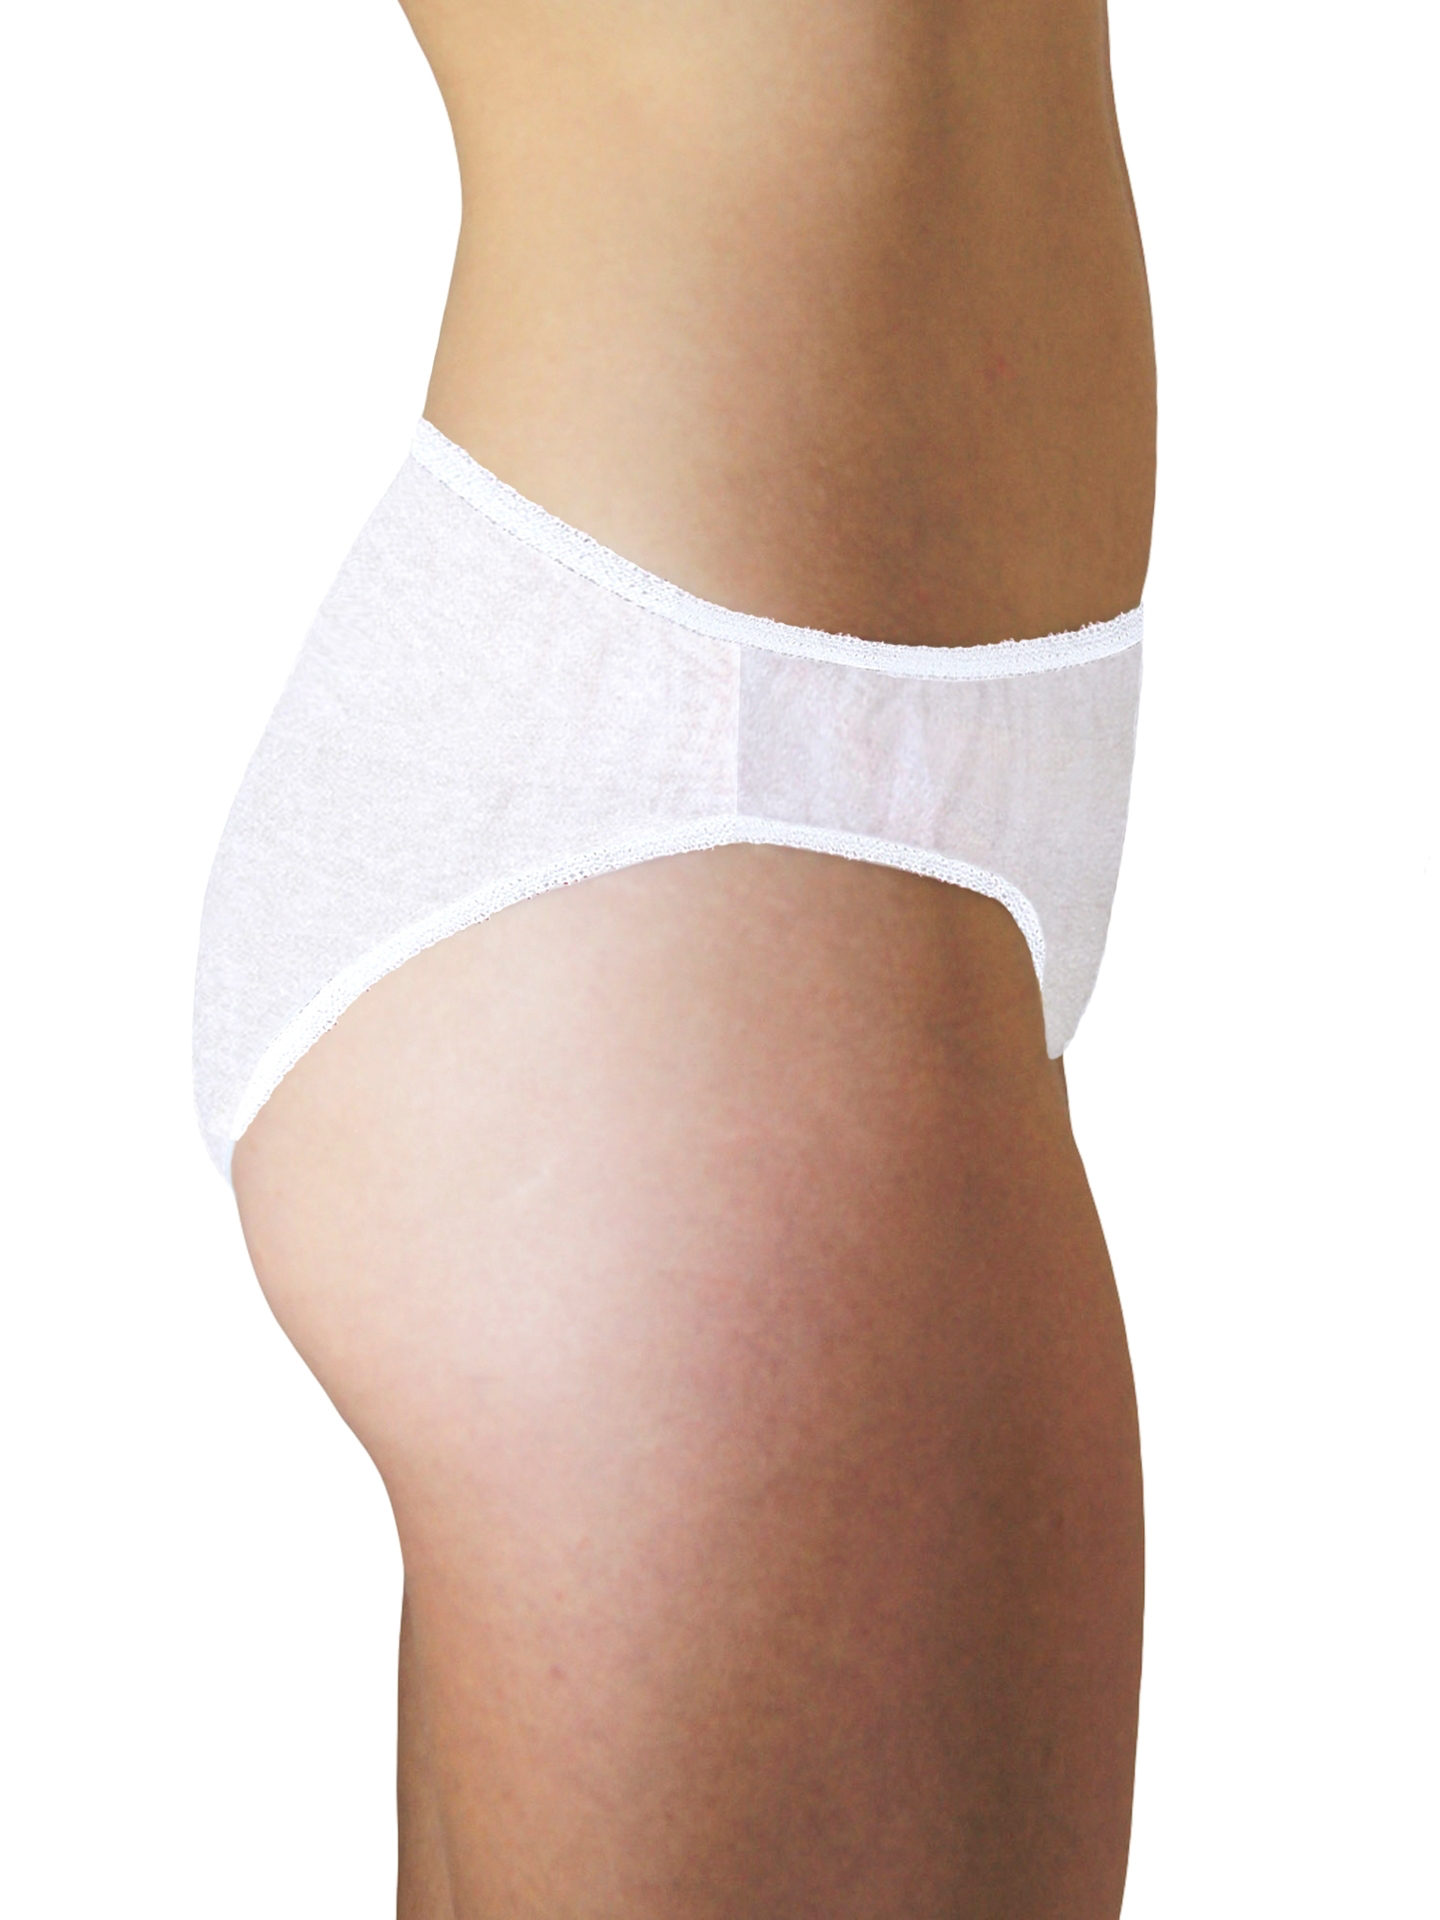 adviicd Briefs Women’s Disposable Underwear for Travel-Hospital Stays- 100%  Cotton Panties White Grey Medium